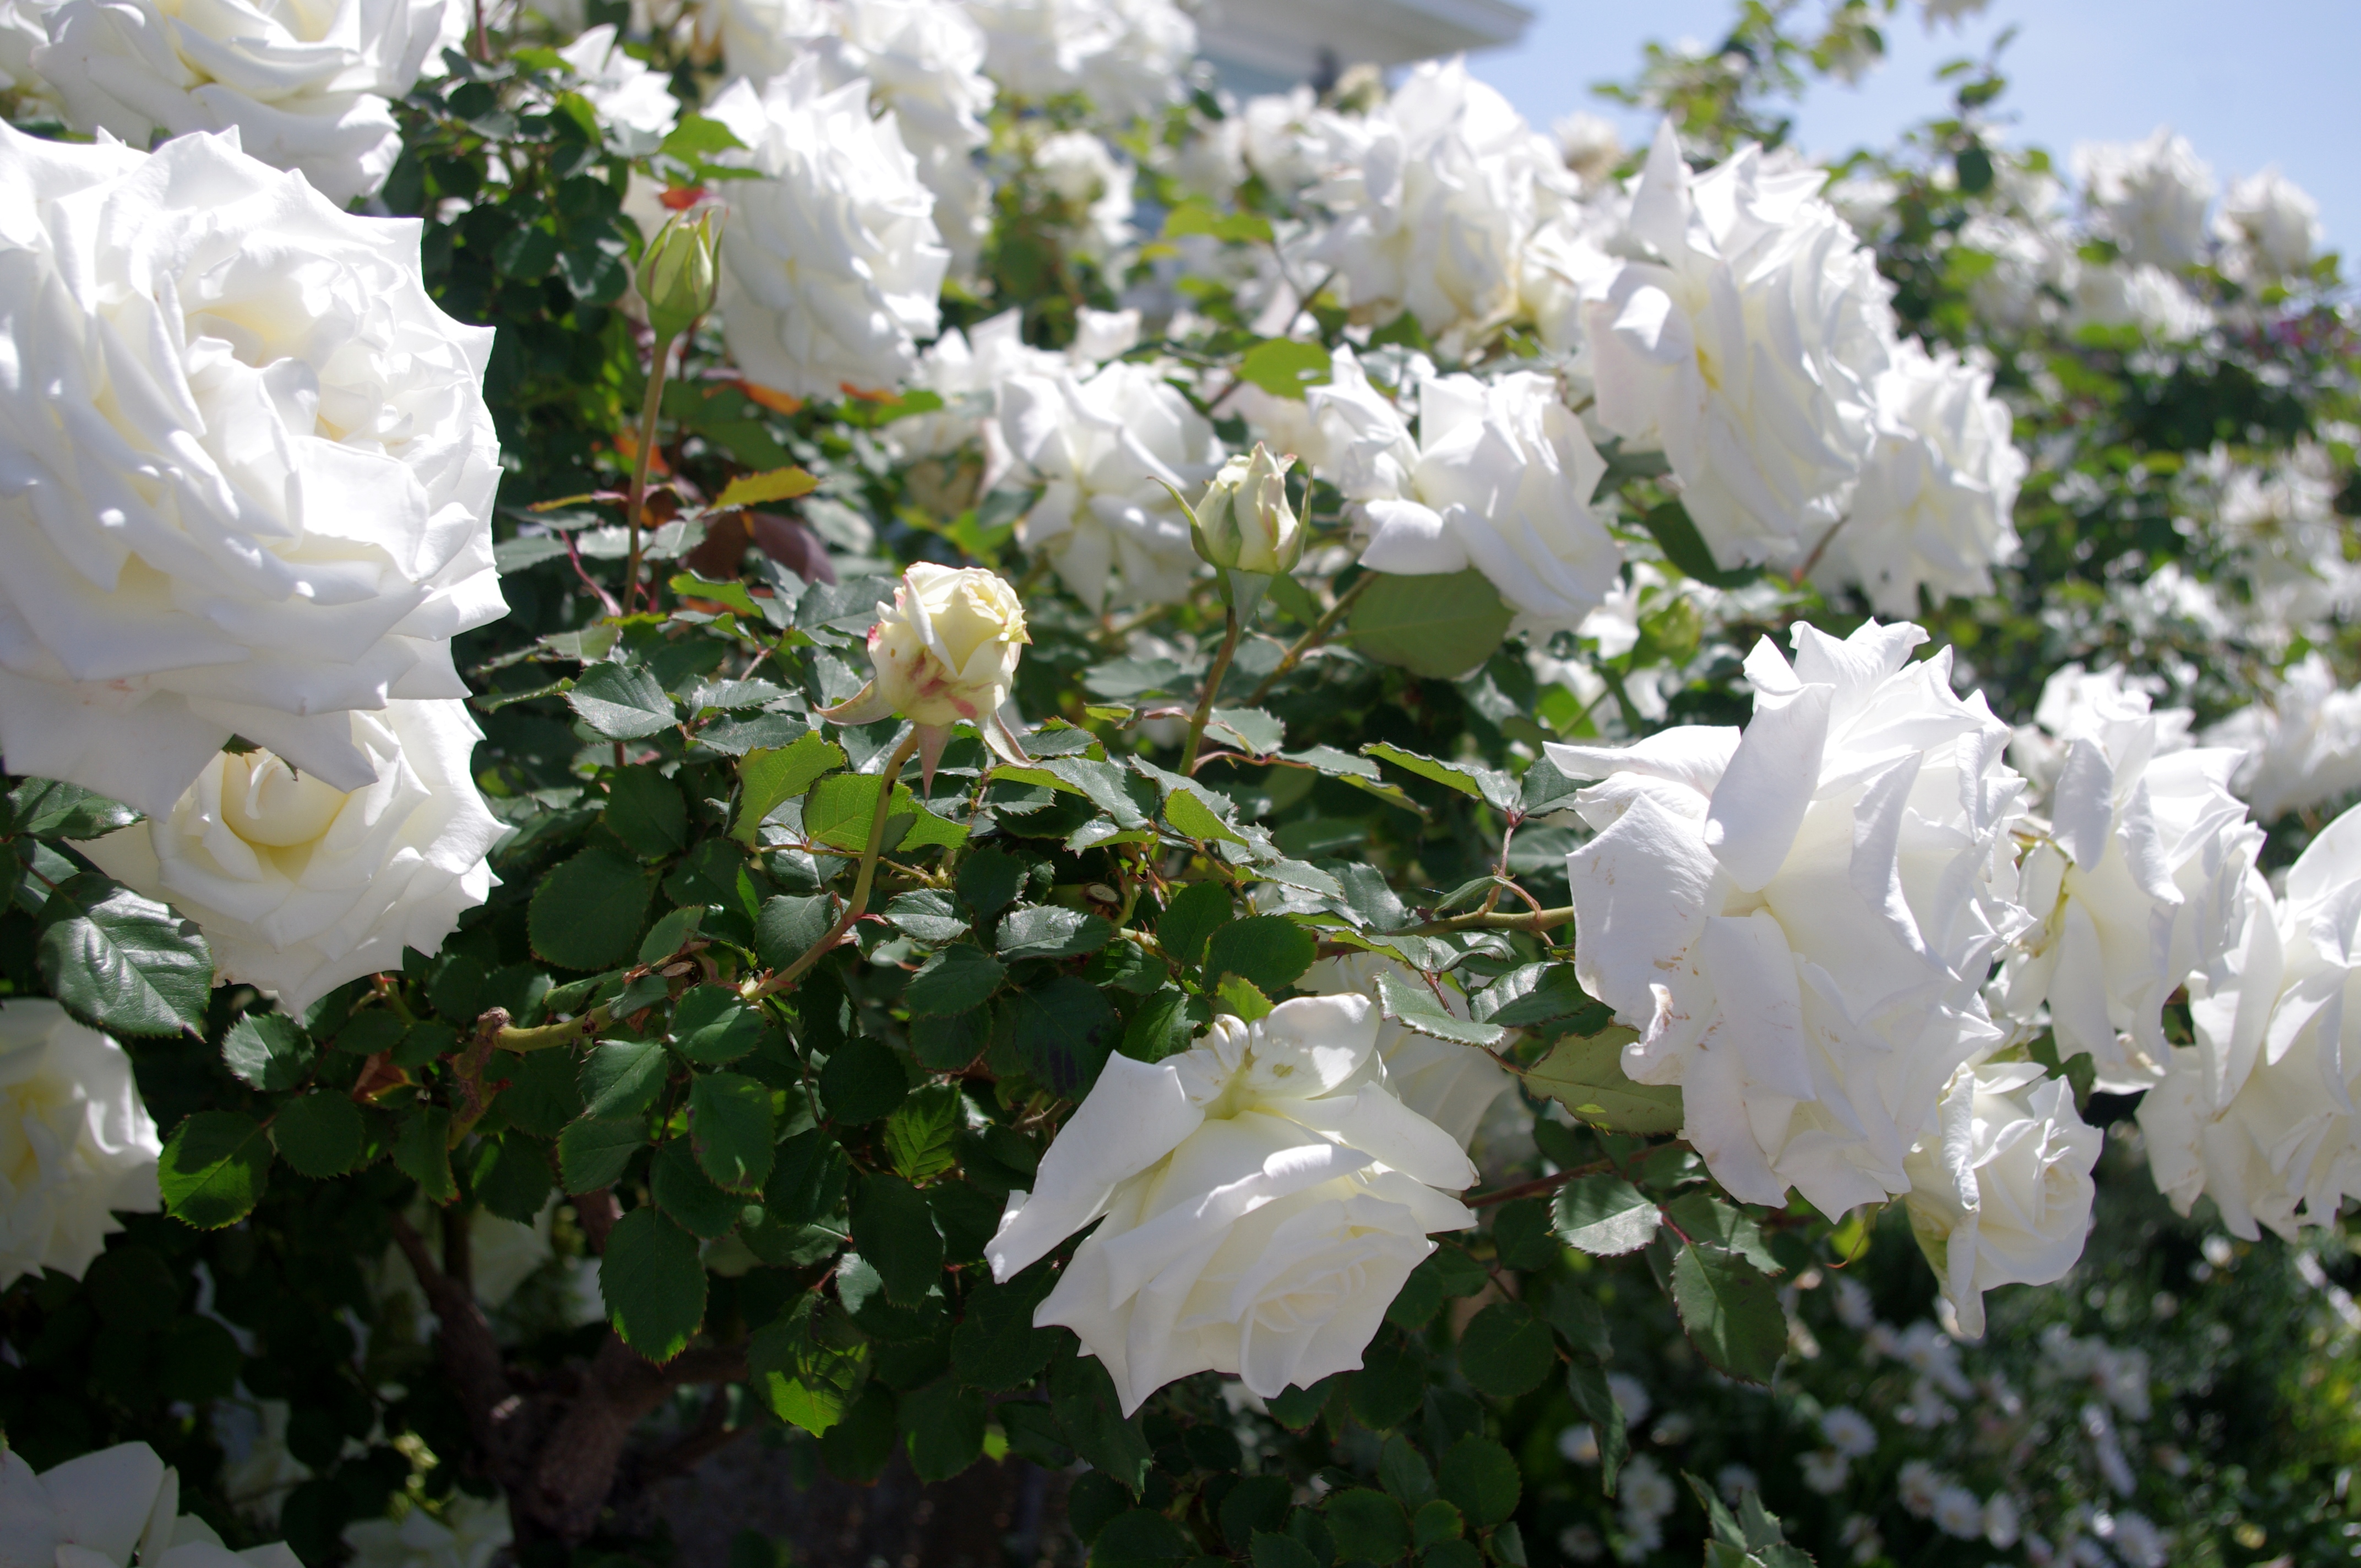 White roses in bloom - Coronado Times